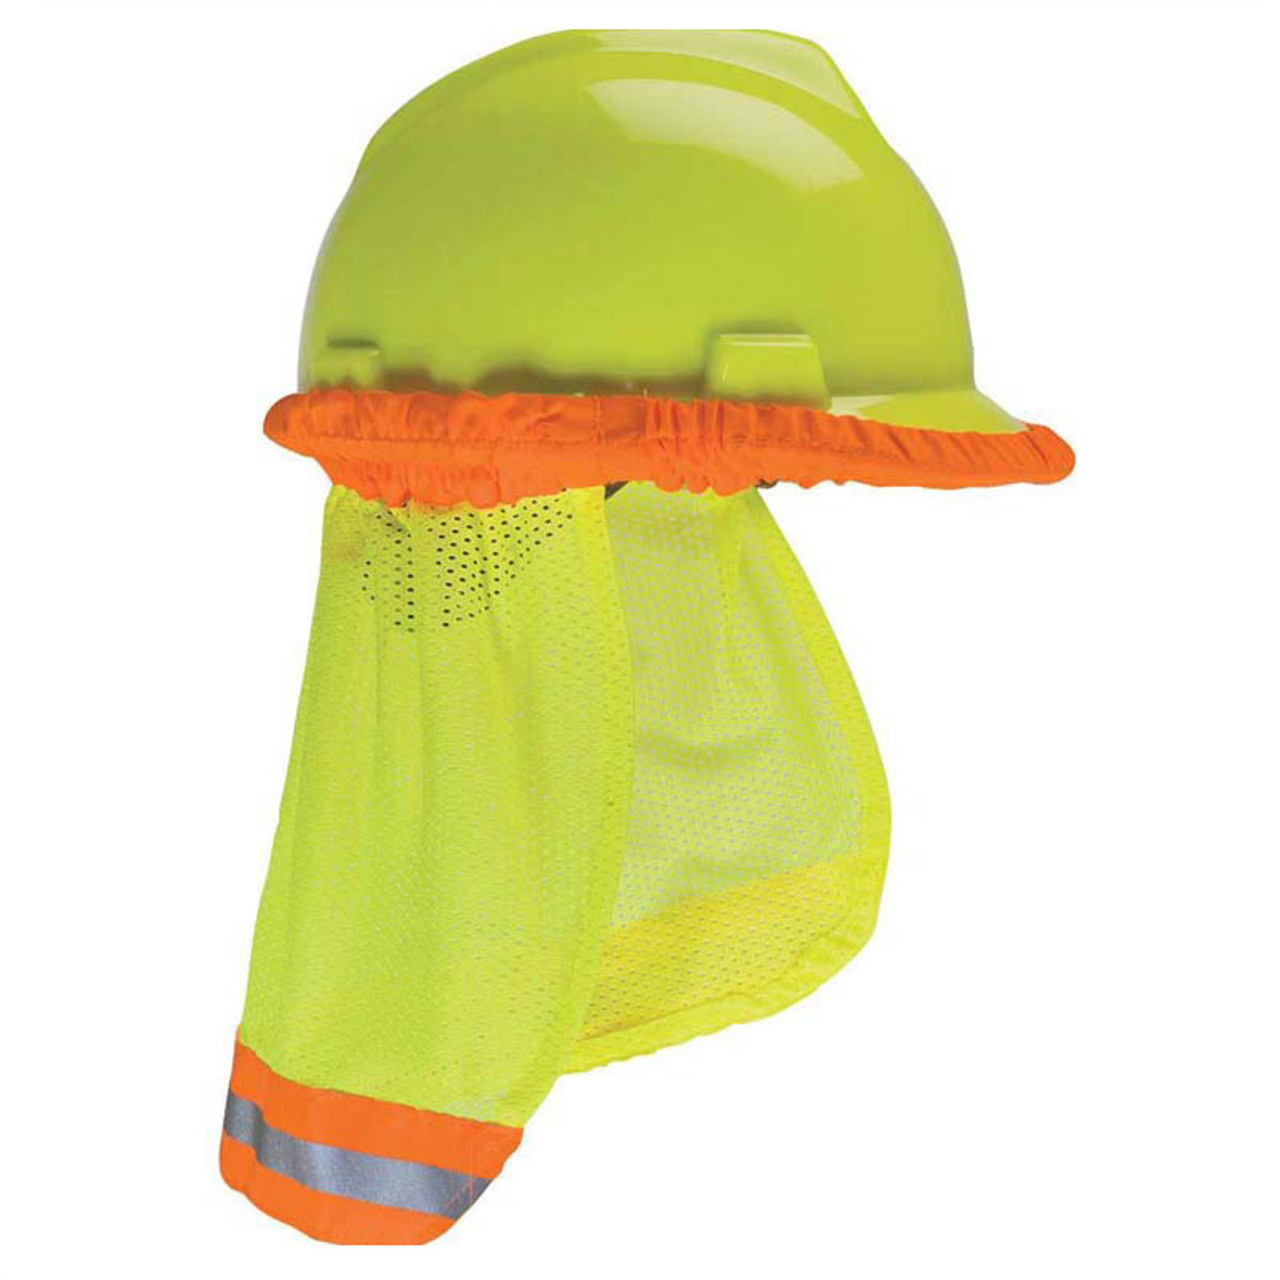 https://cdn11.bigcommerce.com/s-49j9i6u61/images/stencil/1280x1280/products/4825/5318/forester-hi-vis-hard-hat-sunshade-neck-protection-safety-green-25__62284.1624402723.jpg?c=1